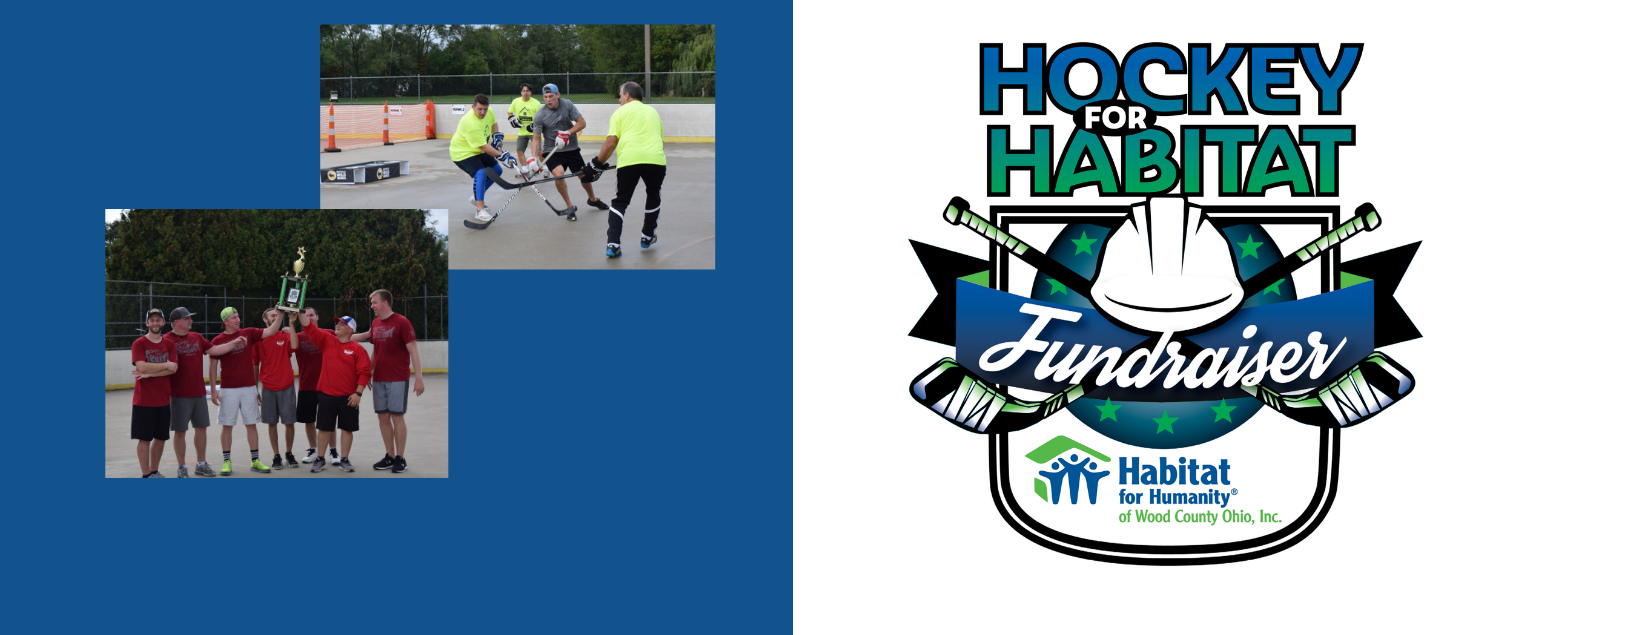 Hockey for Habitat Tournament 